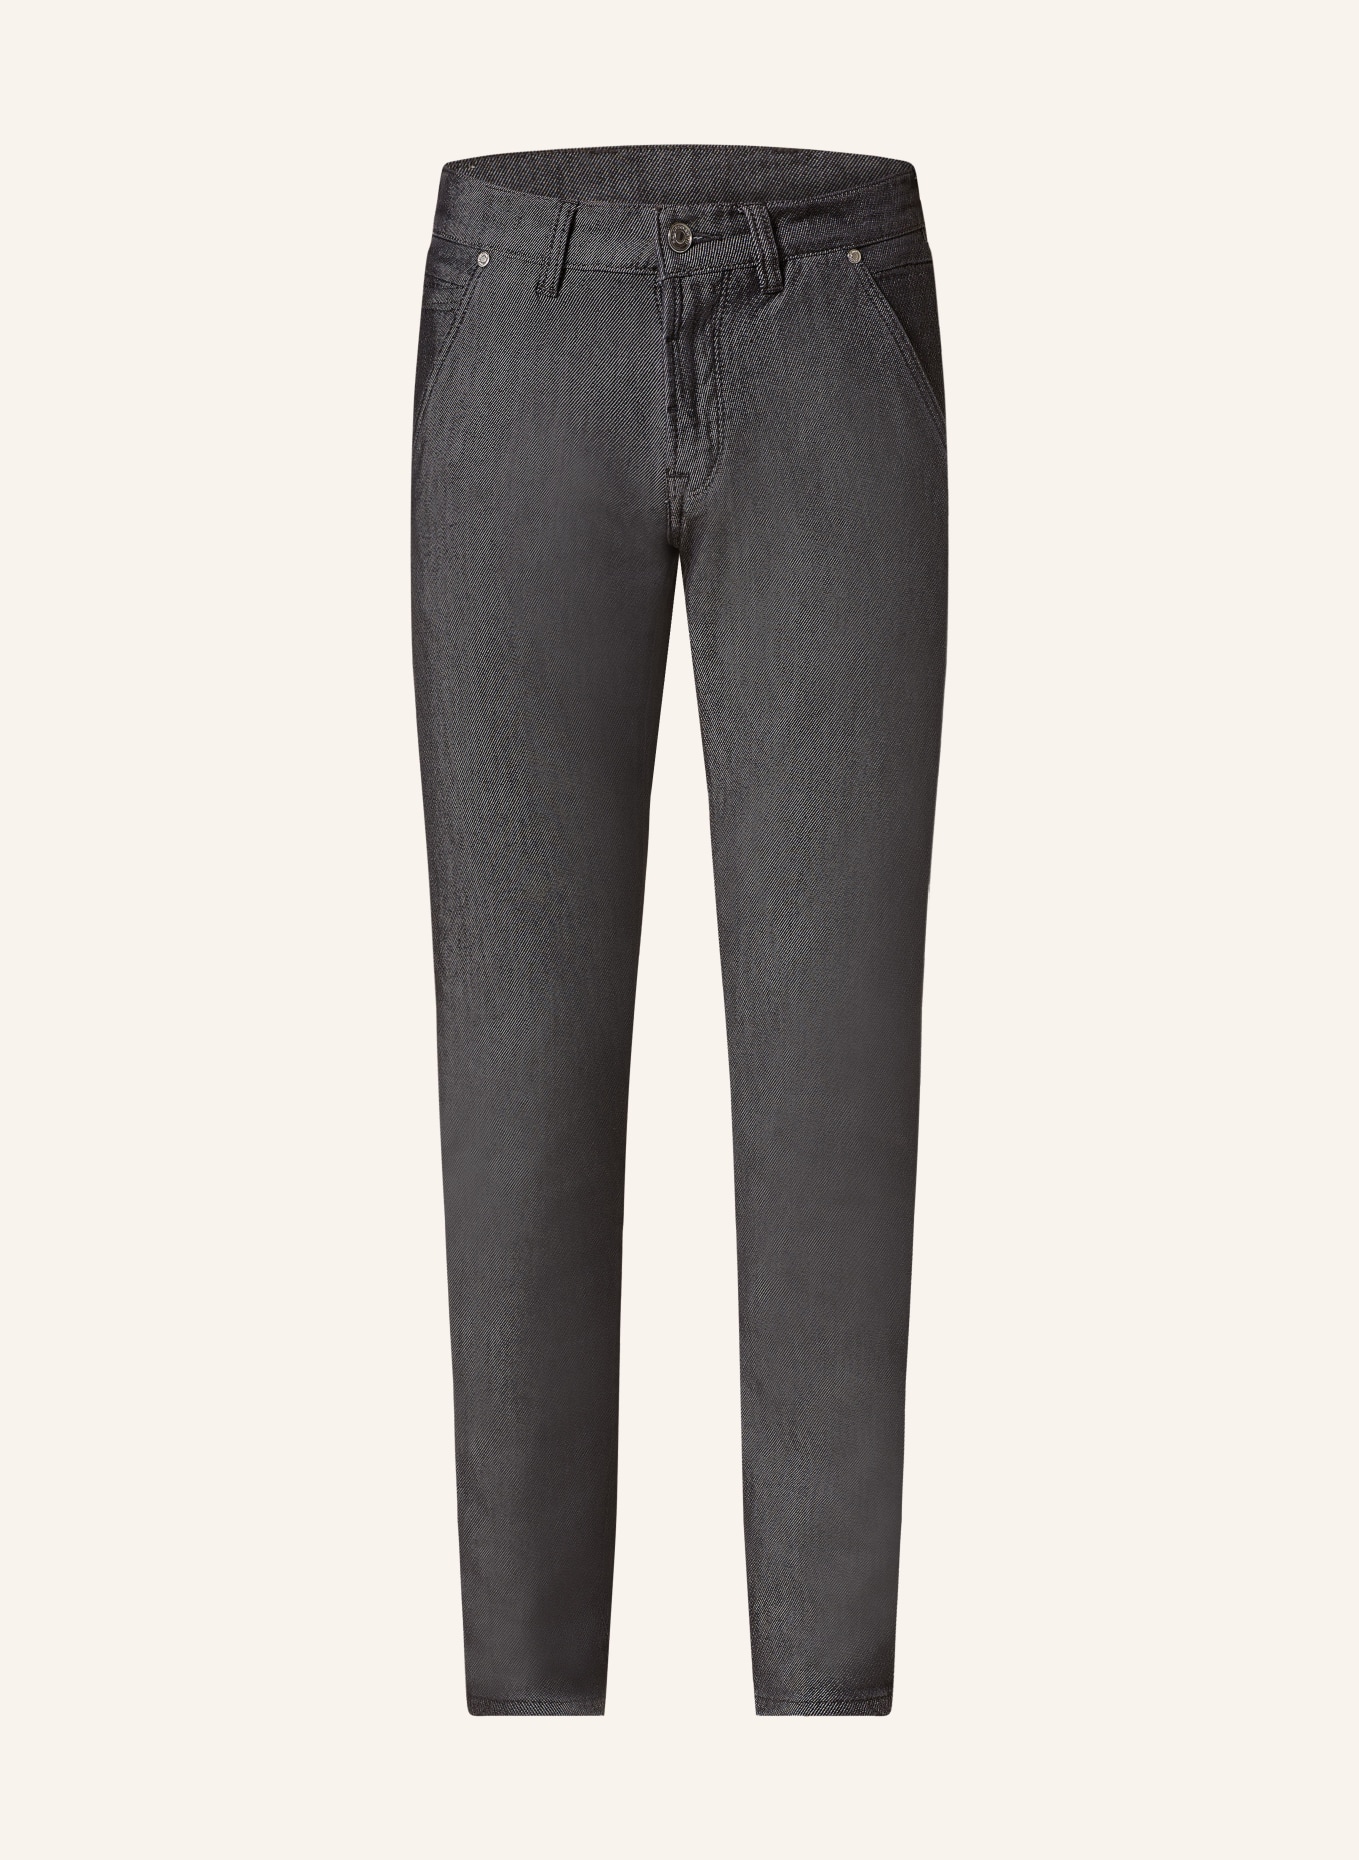 BALDESSARINI Jeans Extra Slim Fit, Farbe: 9811 black stonewash (Bild 1)